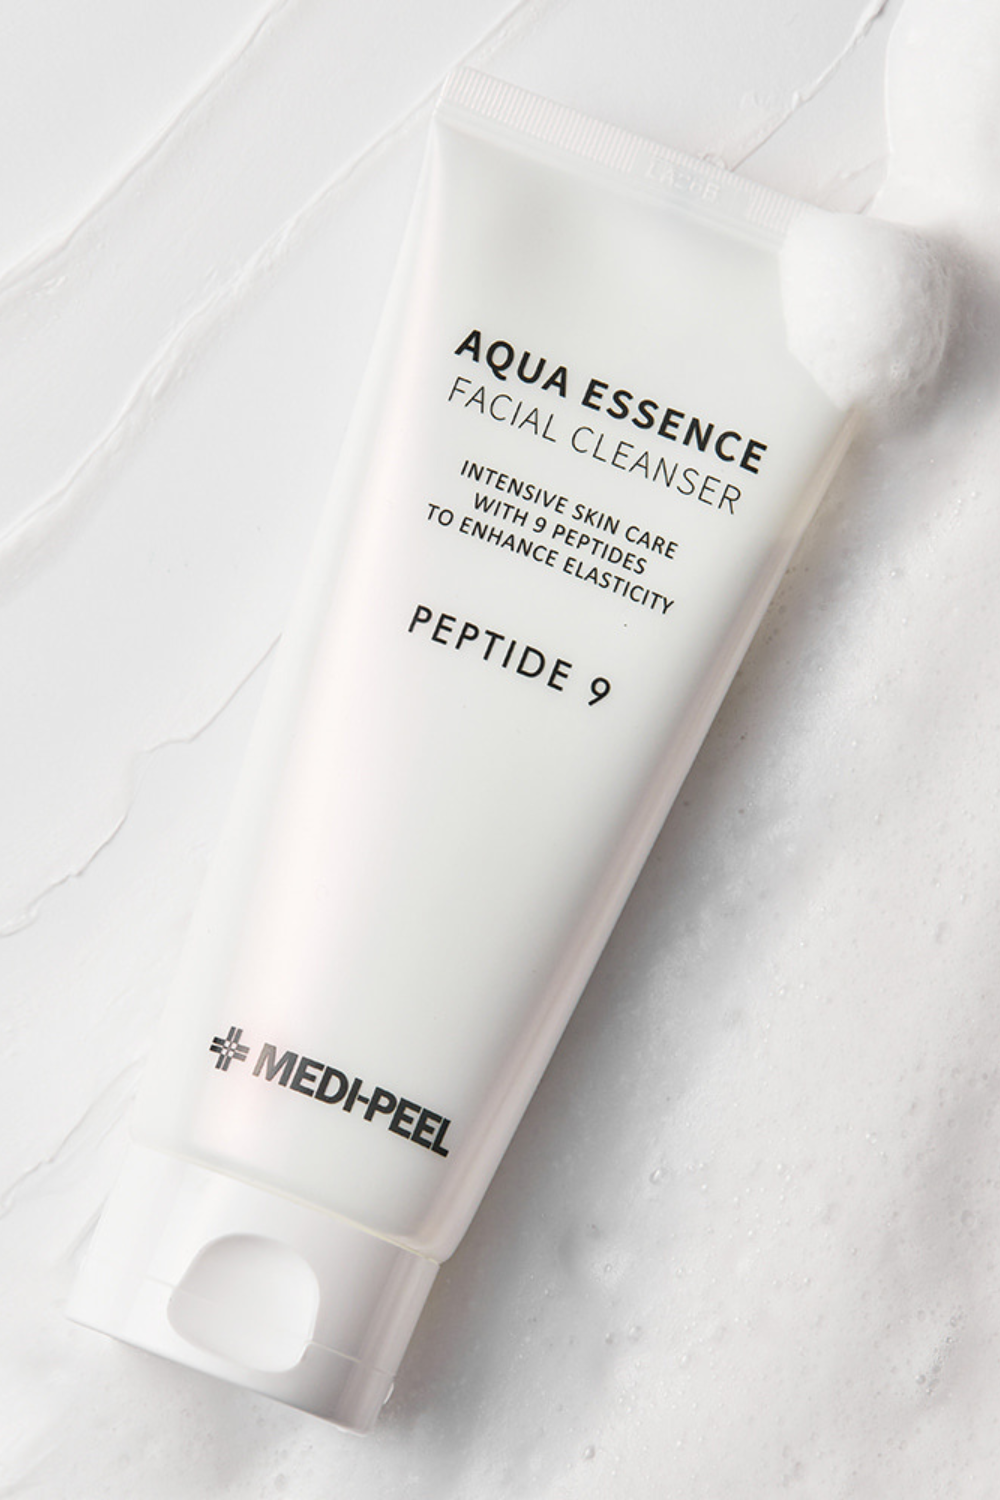 Peptide 9 Aqua Essence Facial Cleanser 150ml MEDI-PEEL